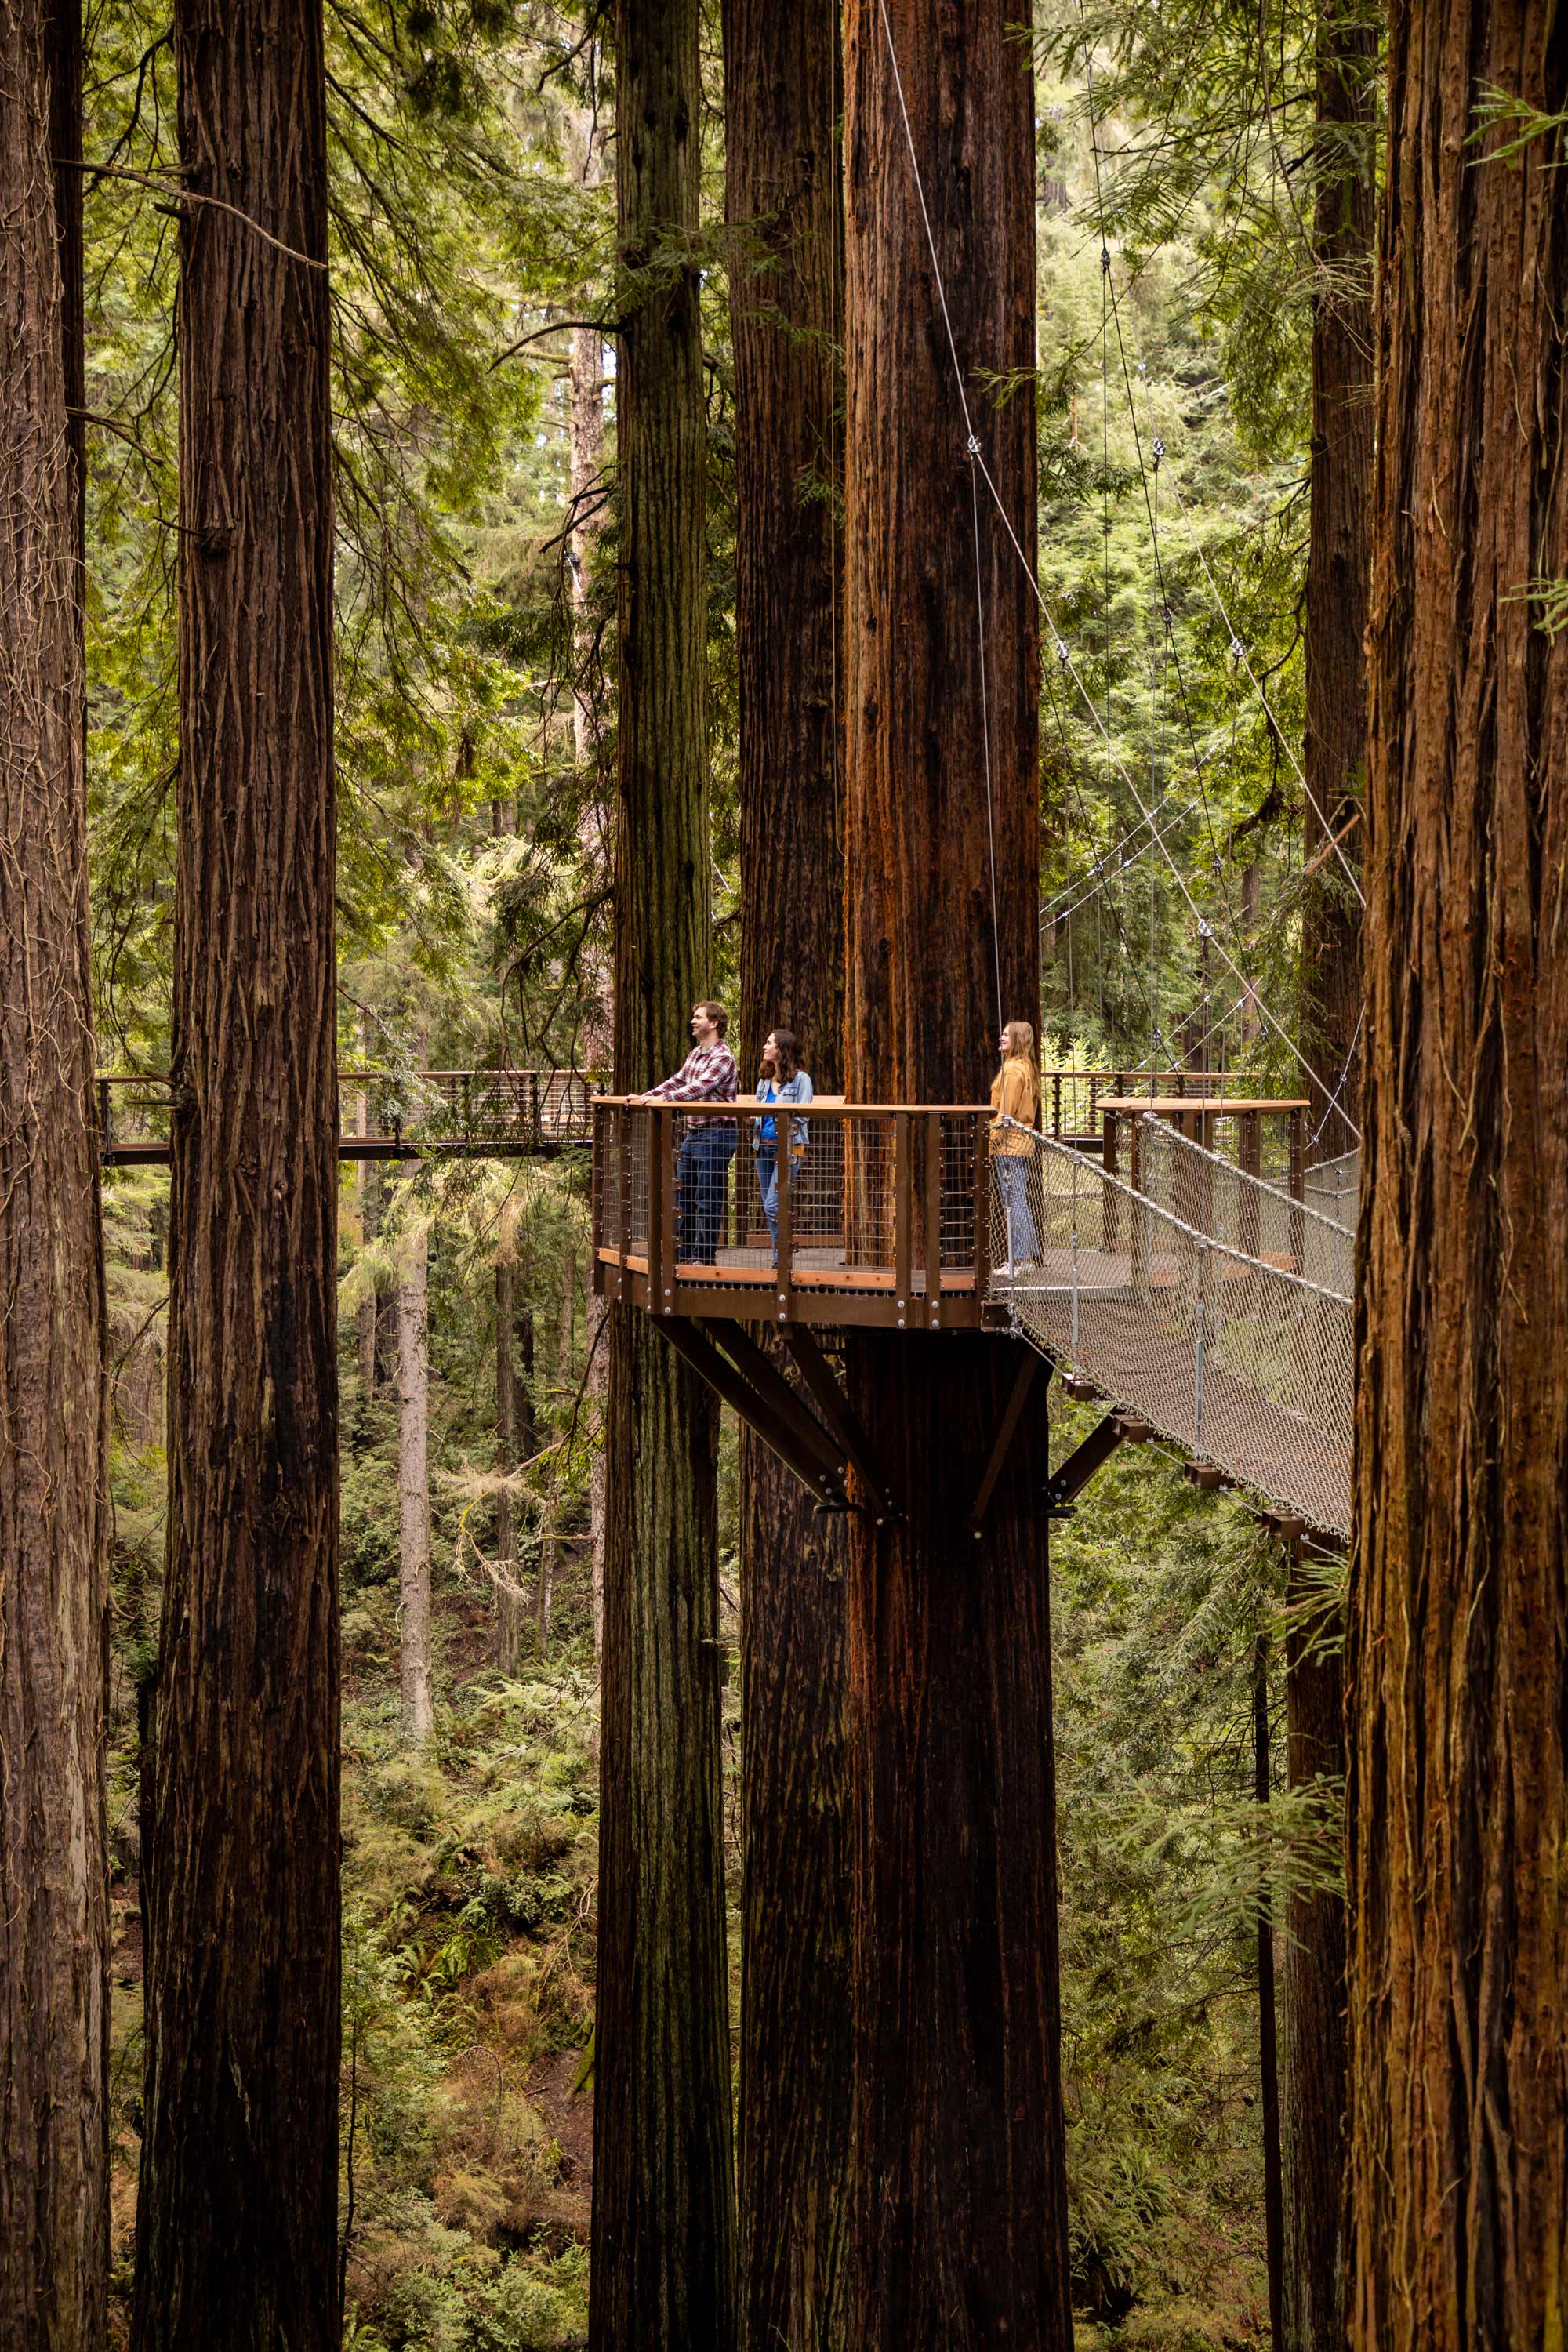 The new Redwood Sky Walk in Eureka takes soft adventurers 100 feet above the forest floor. Photo Courtesy VisitHumboldt.com/ AmyKumler